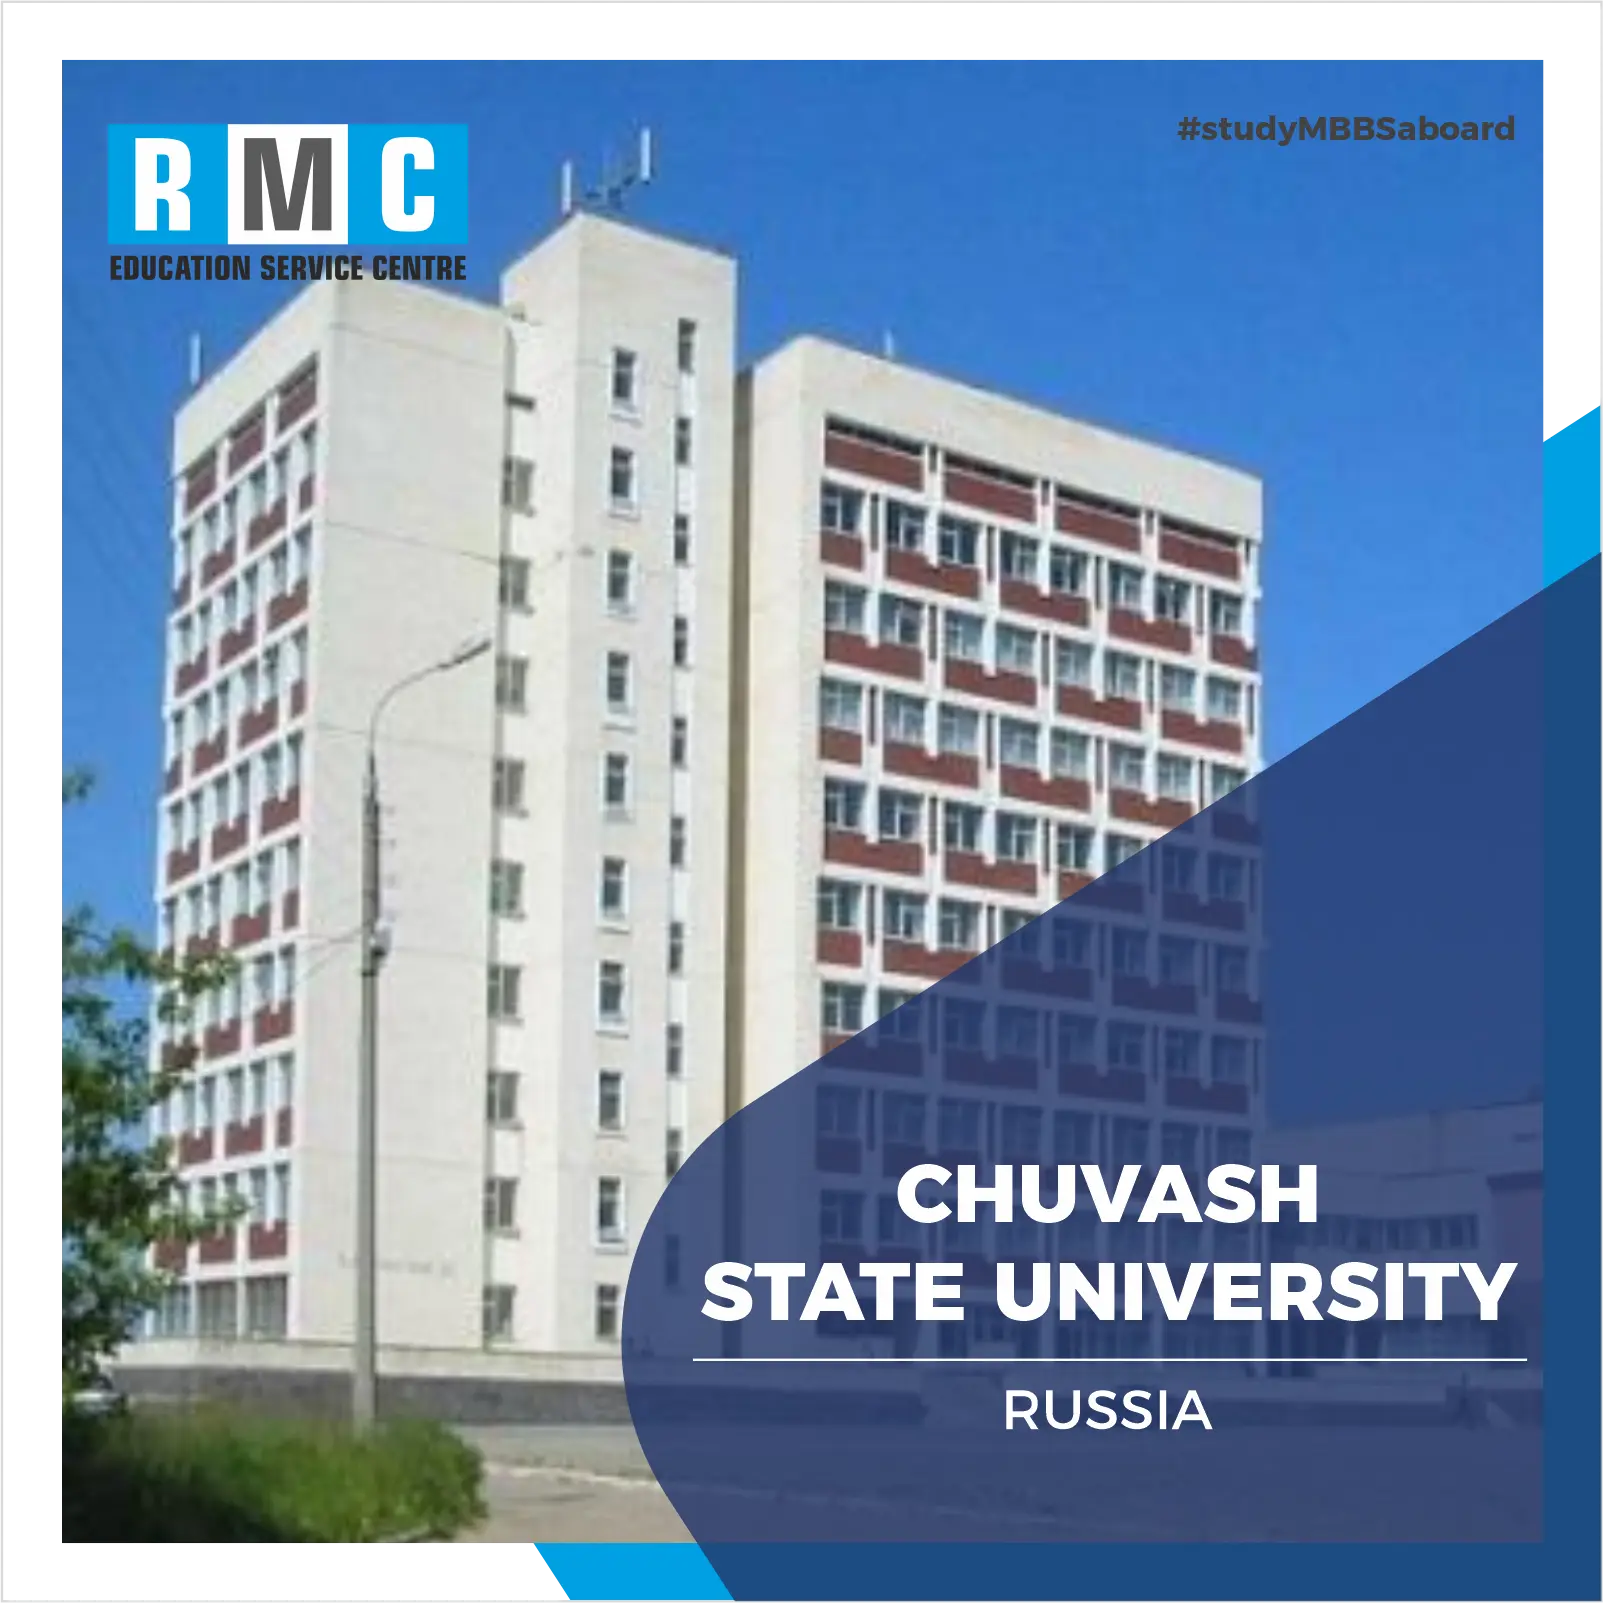 Chuvash State University